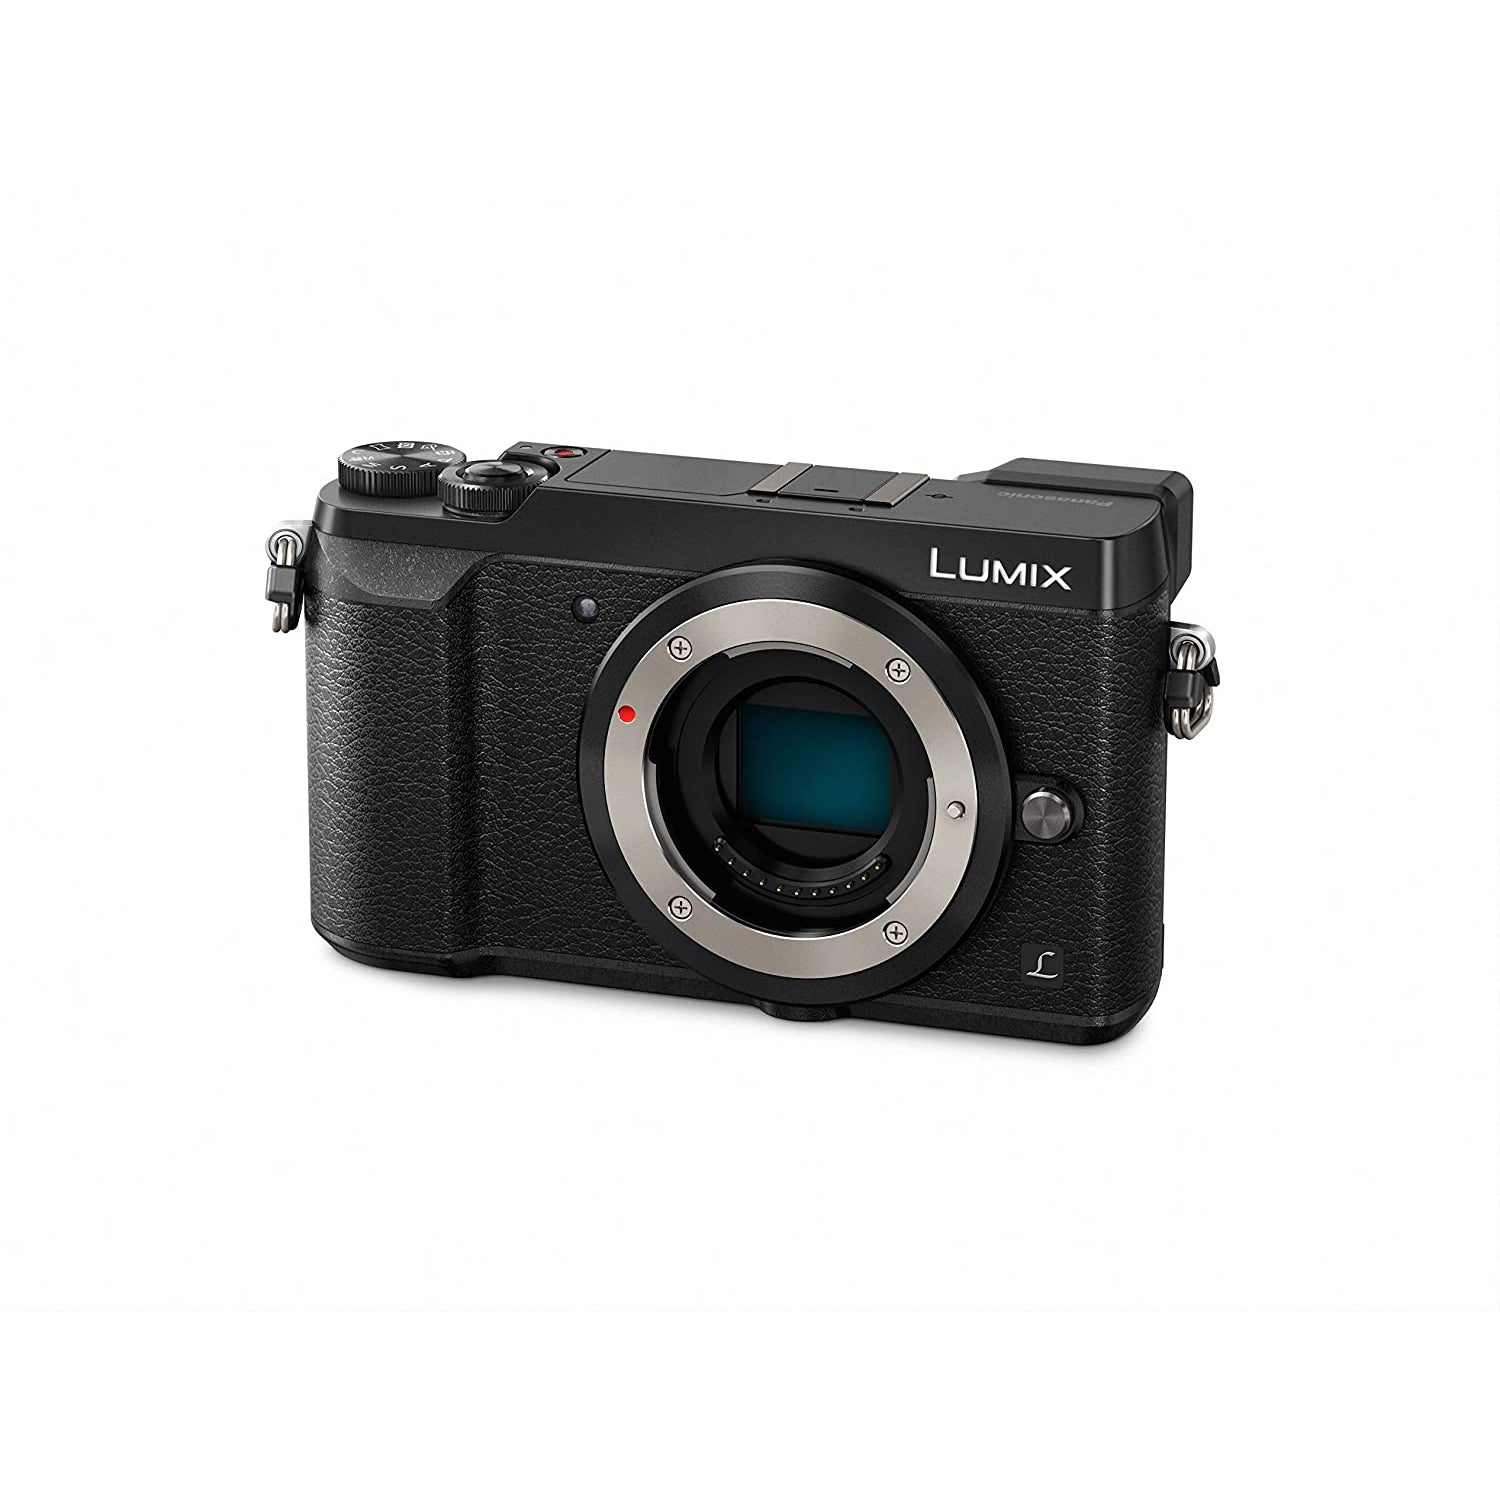 Panasonic DMC-GX80EB-K Digital Single Lens Mirrorless Camera Body Only - Black